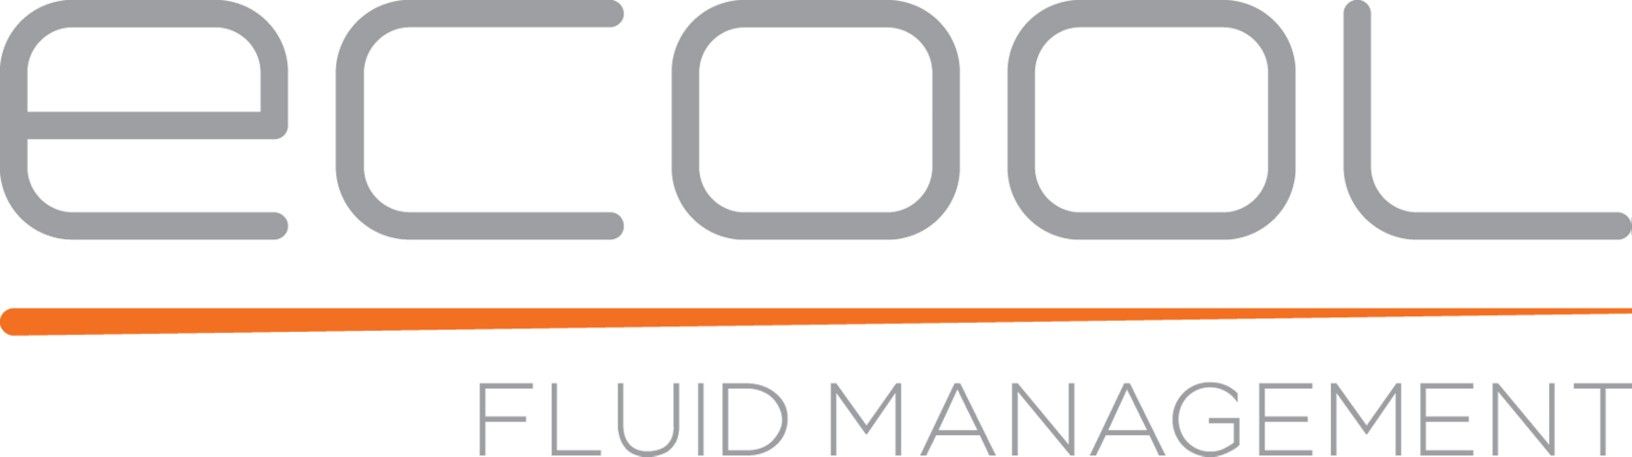 ecool_logo